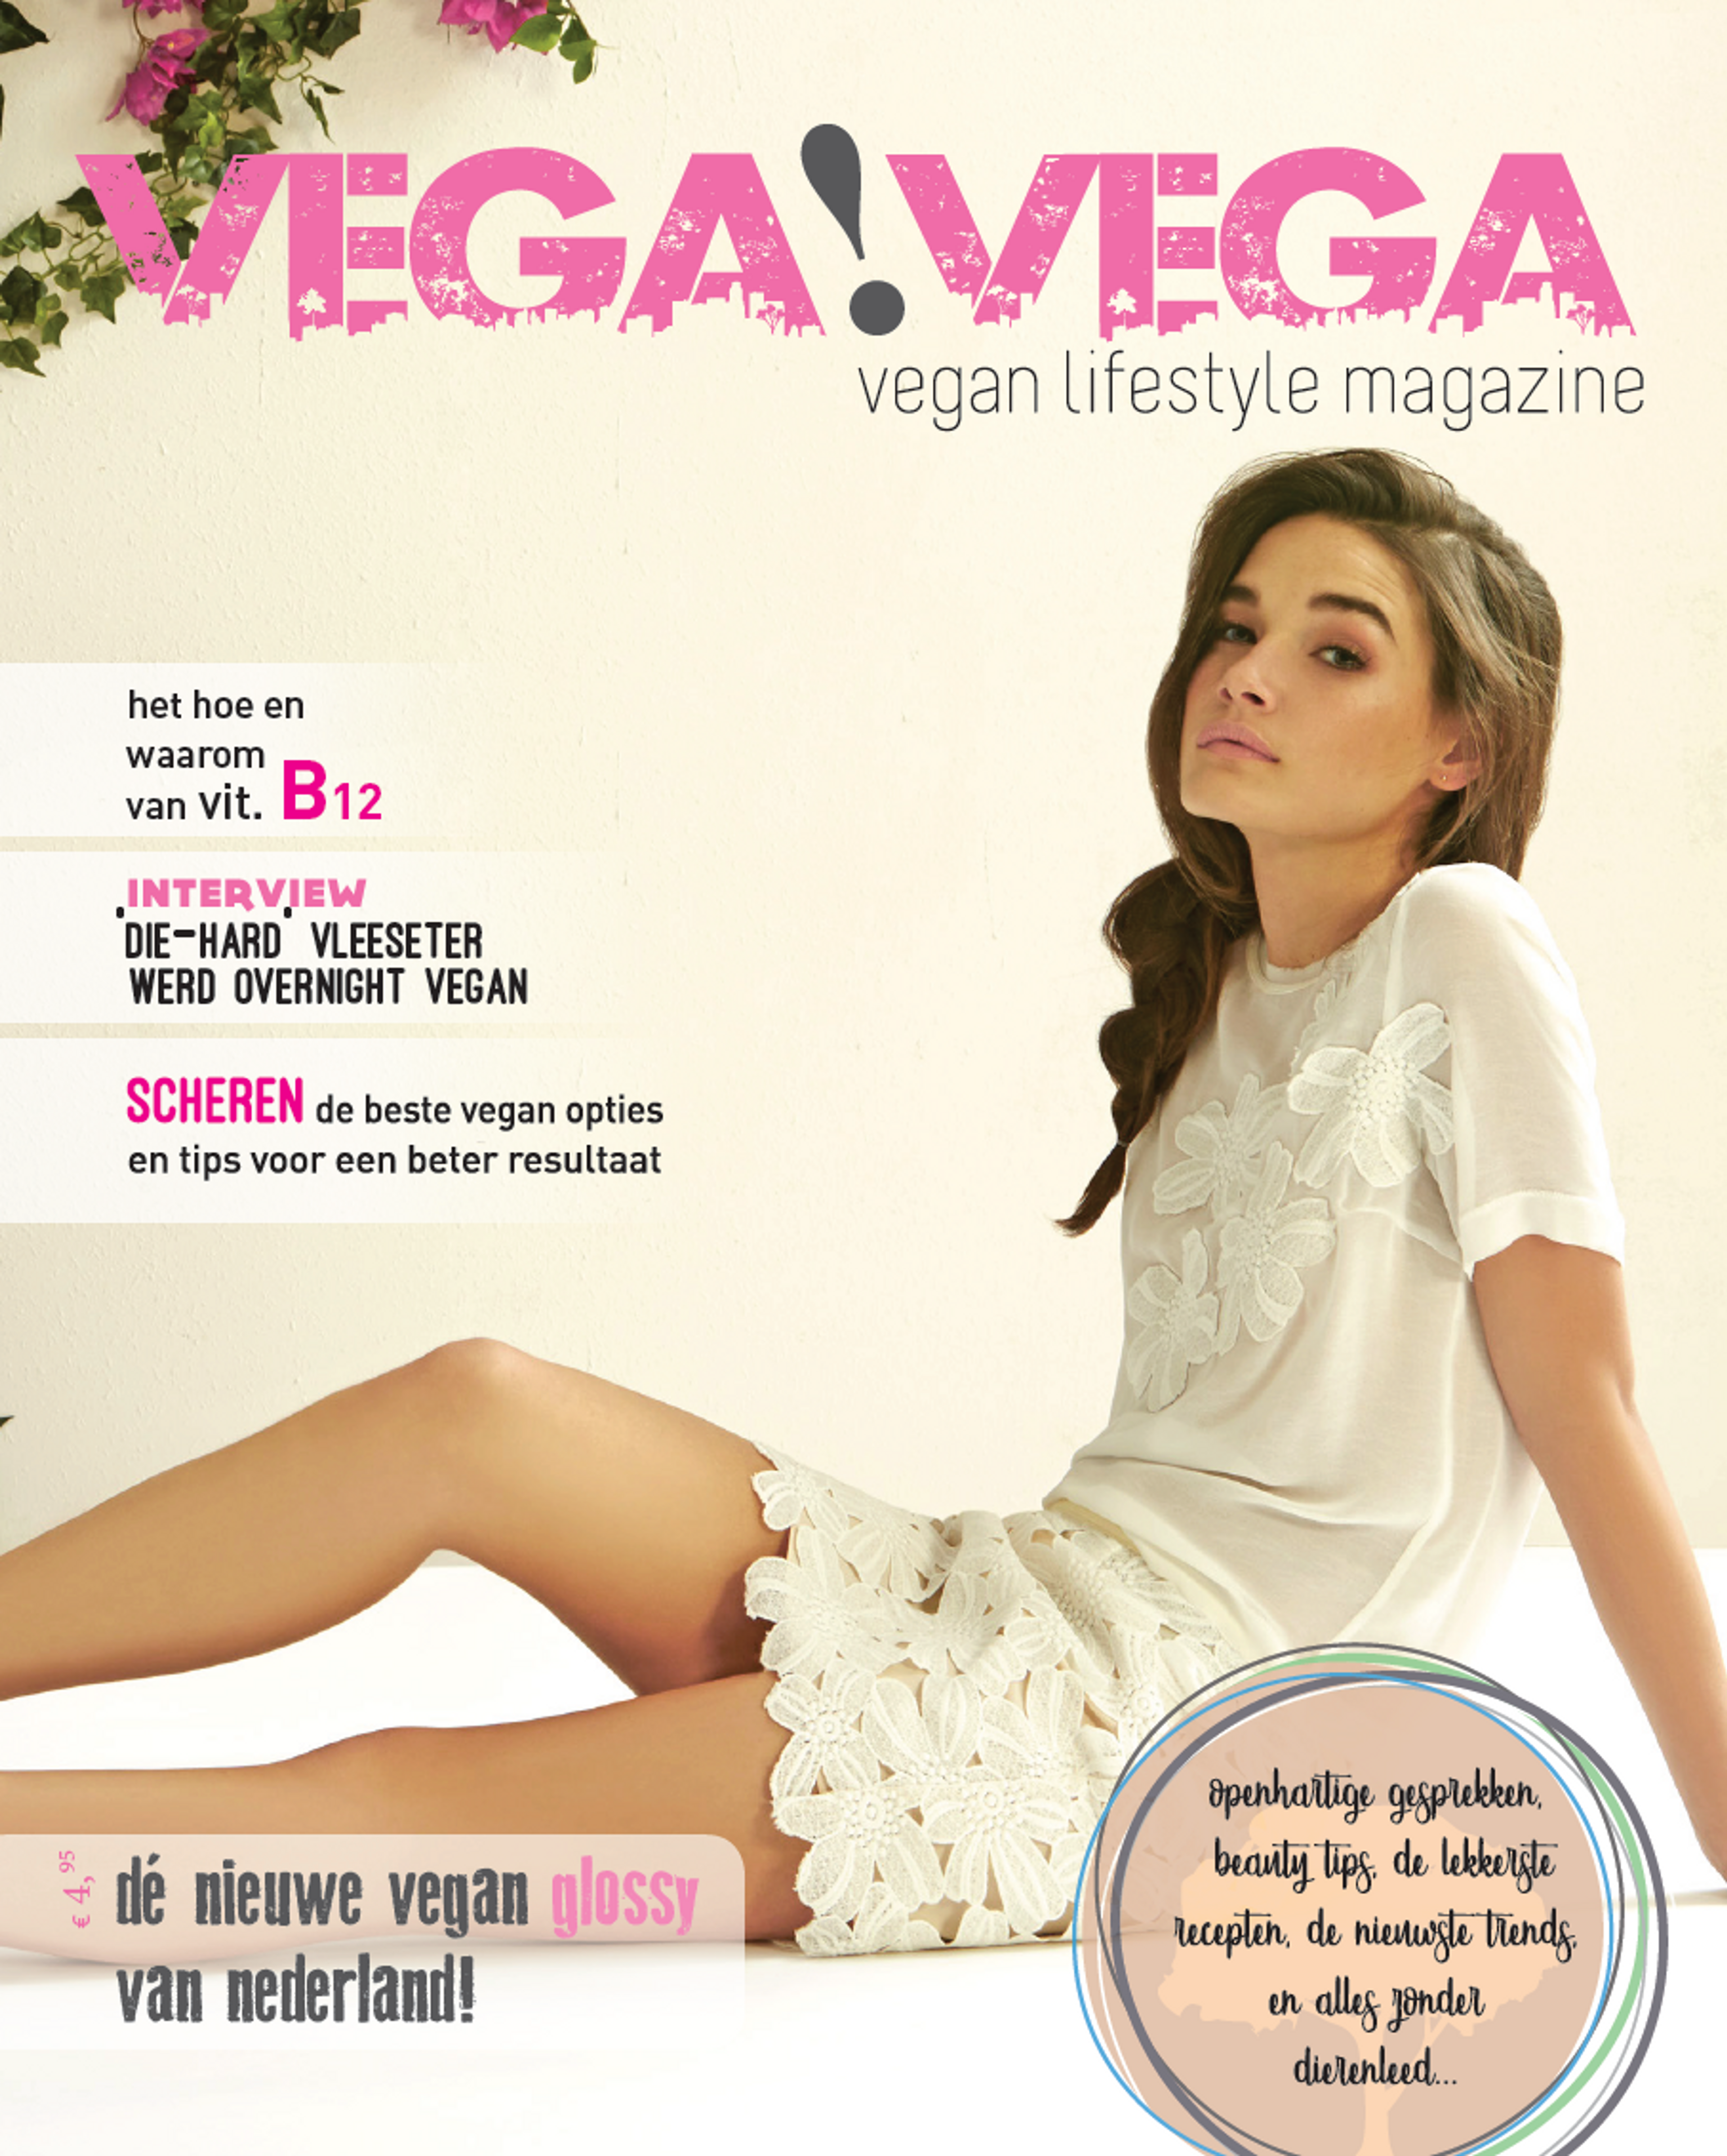 Vega Lifestyle Magazine wijzigt naam in VegaVega